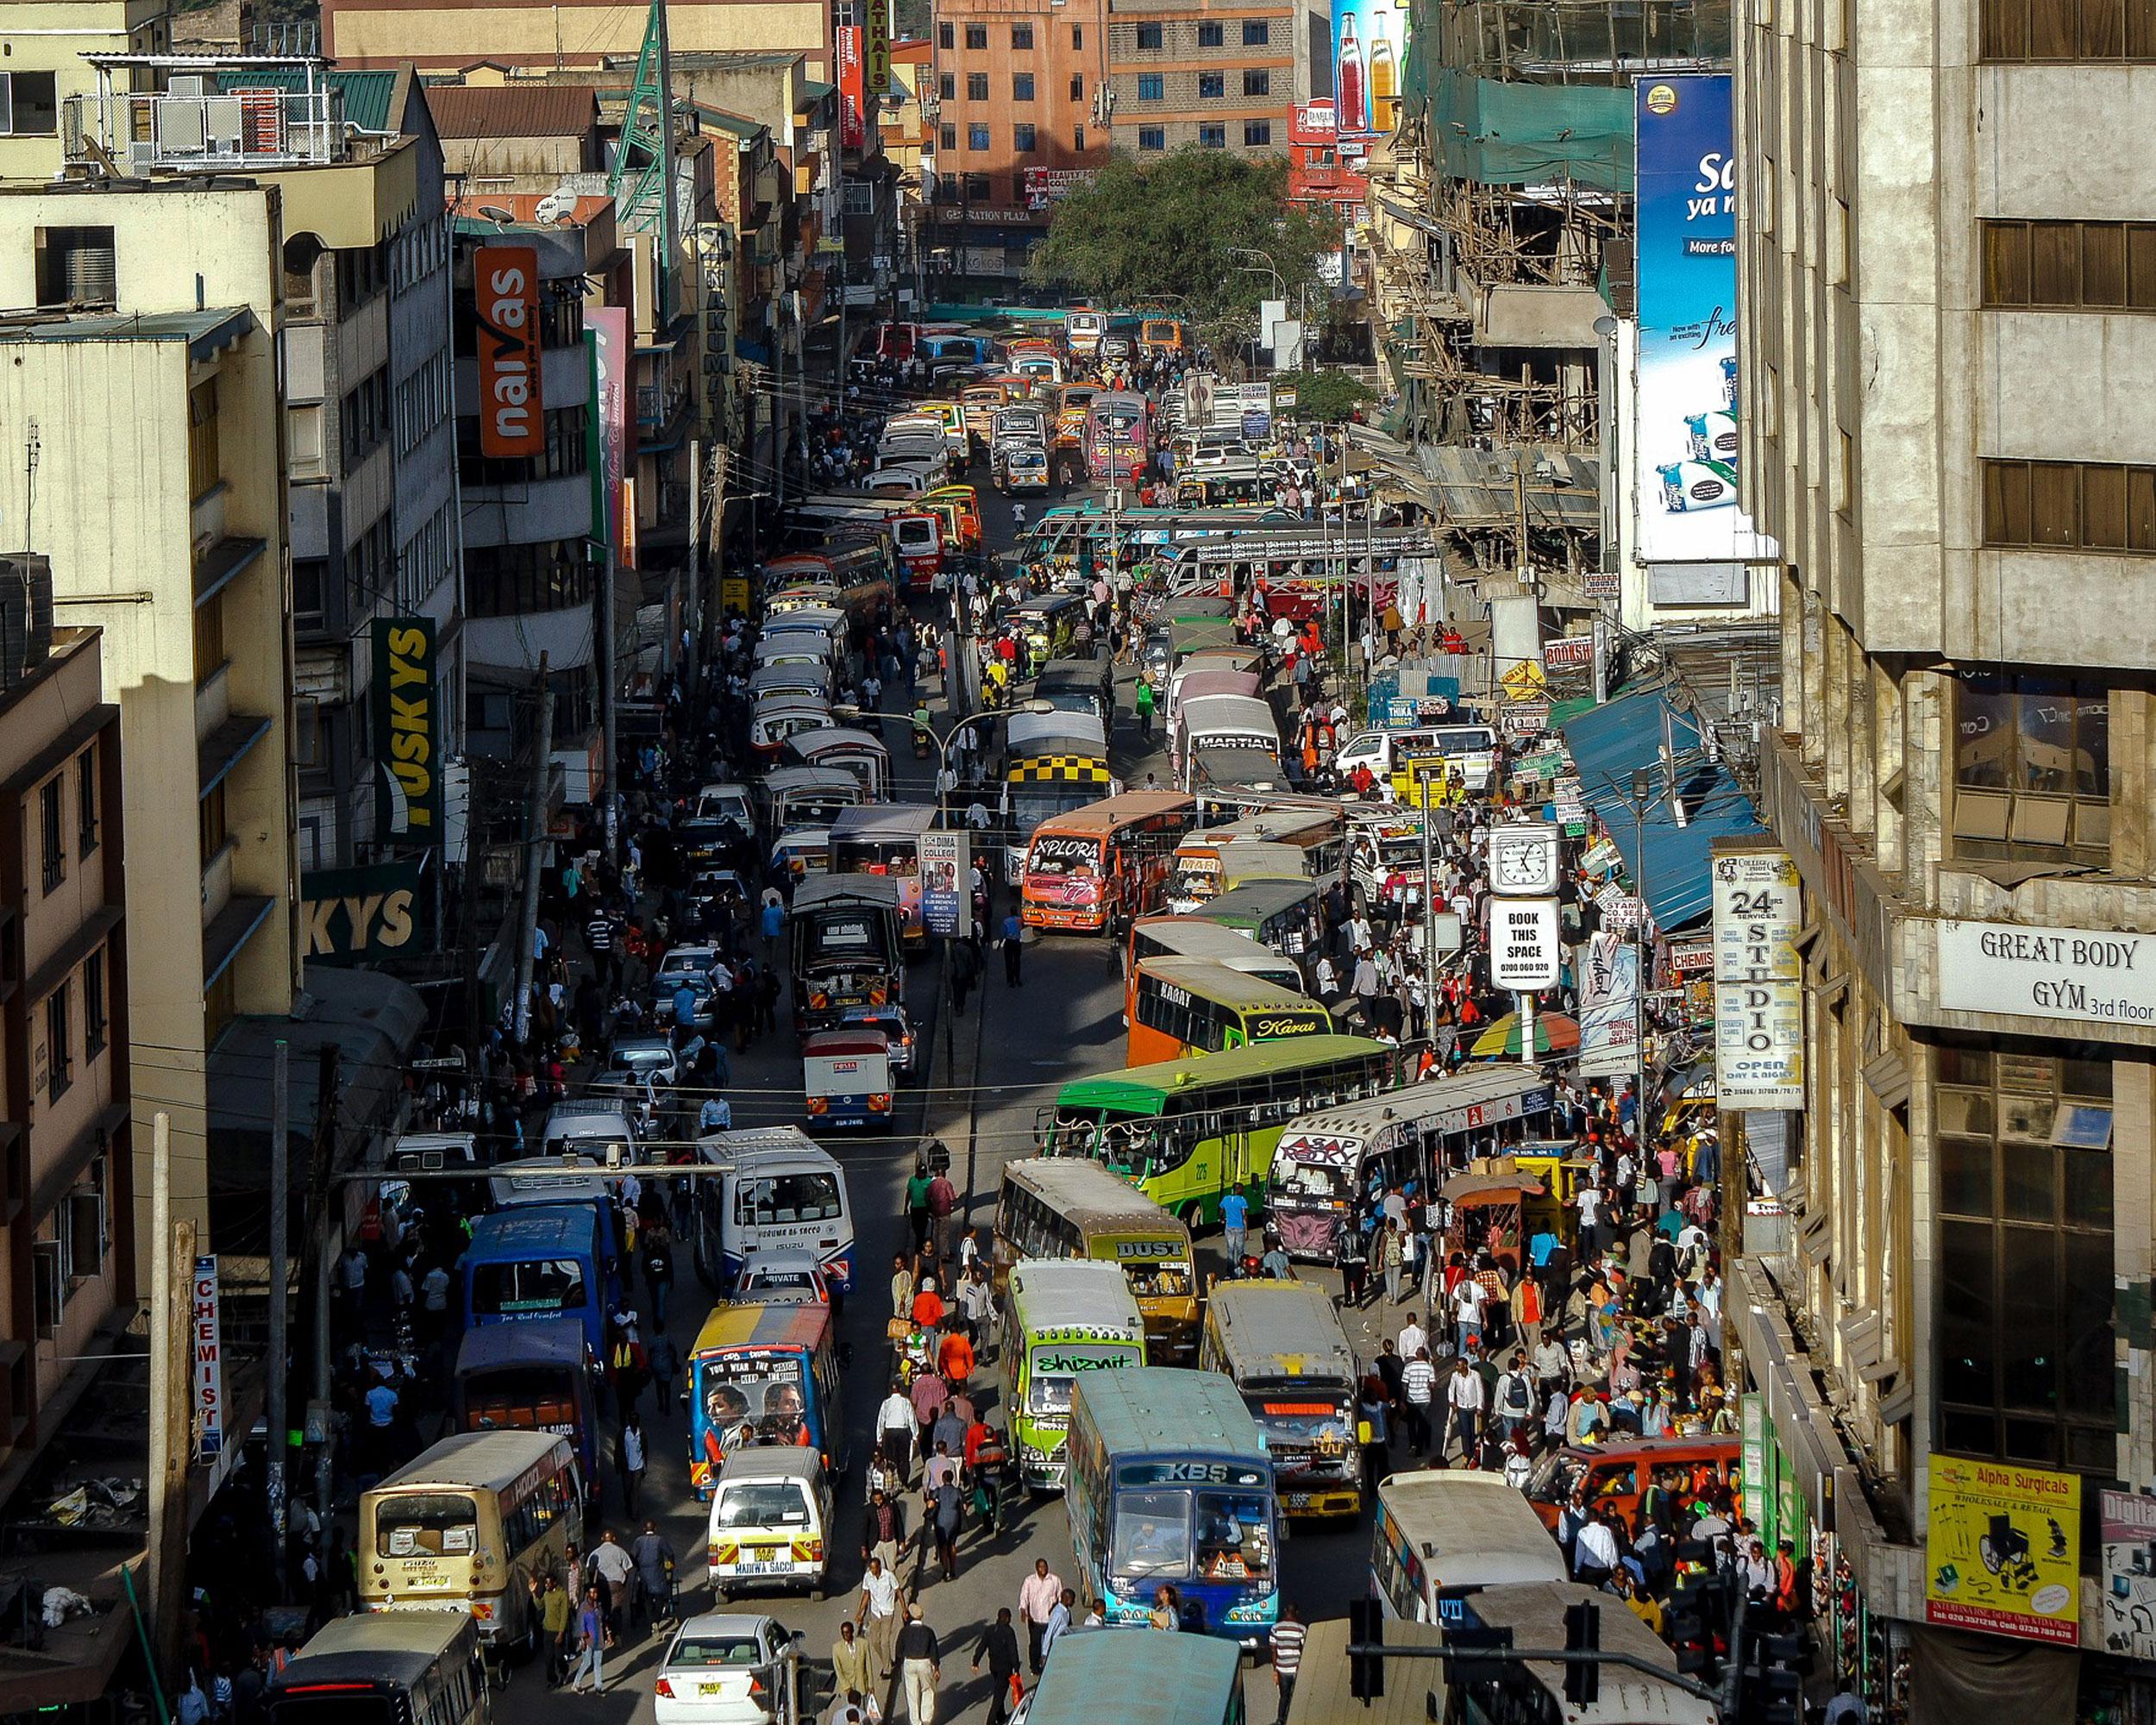 Chaos in Nairobi streets